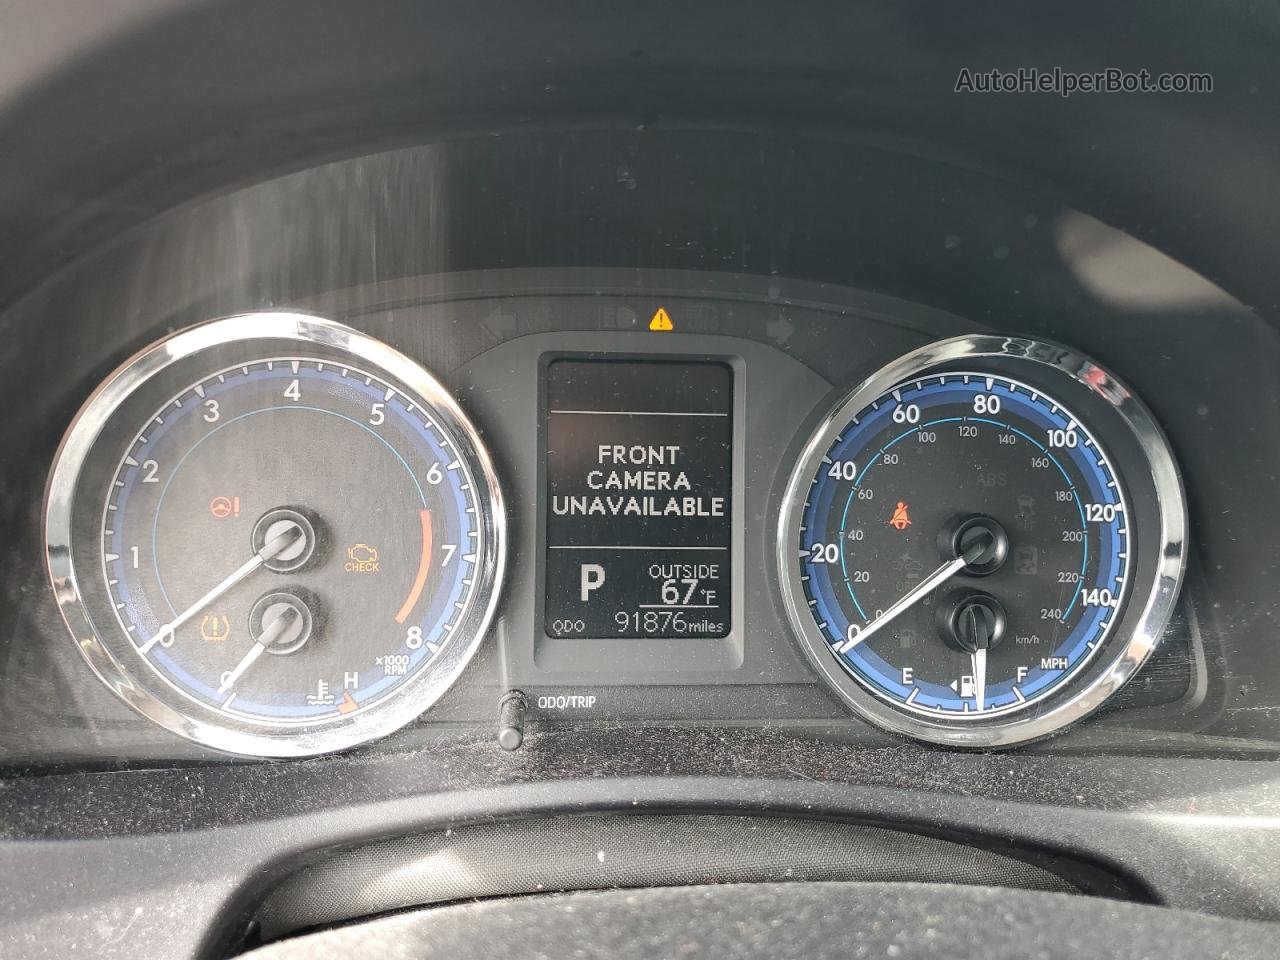 2019 Toyota Corolla L Синий vin: 5YFBURHE3KP932607